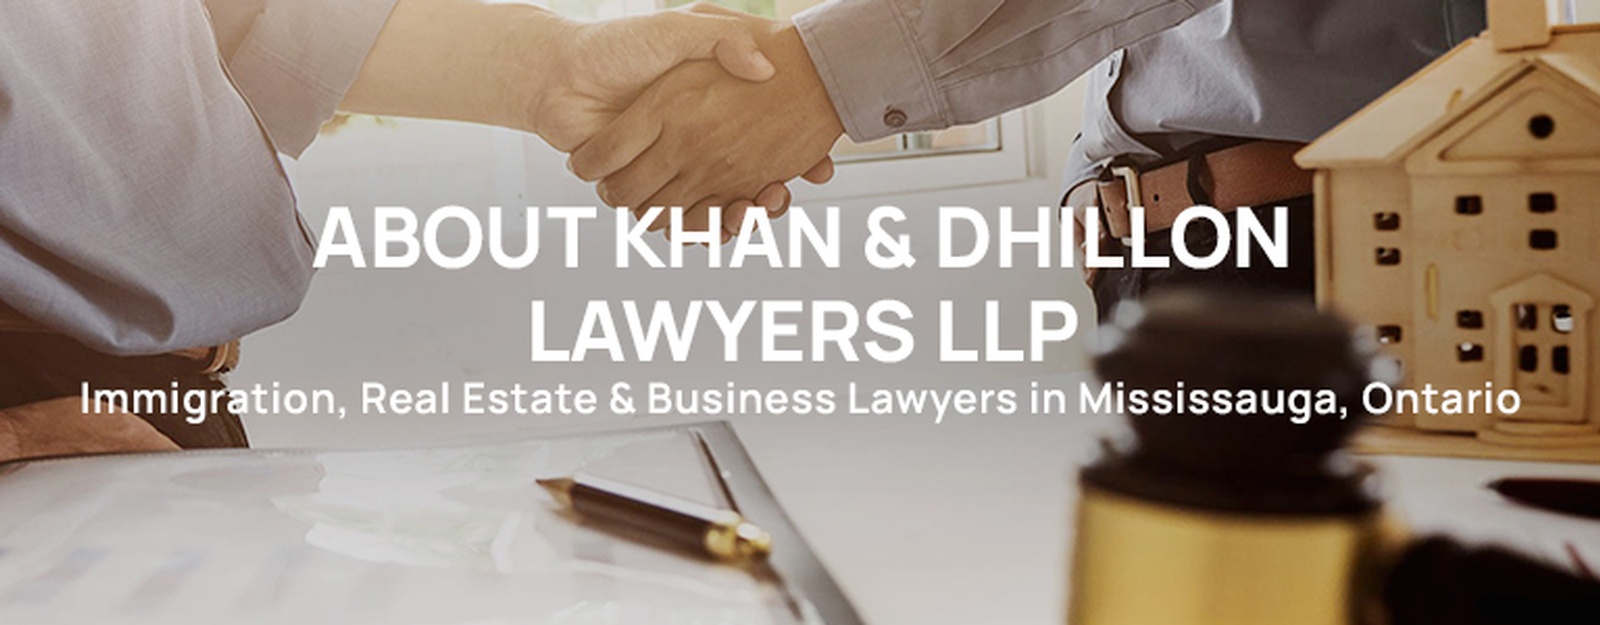 About Khan & Dhillon Lawyers LLP